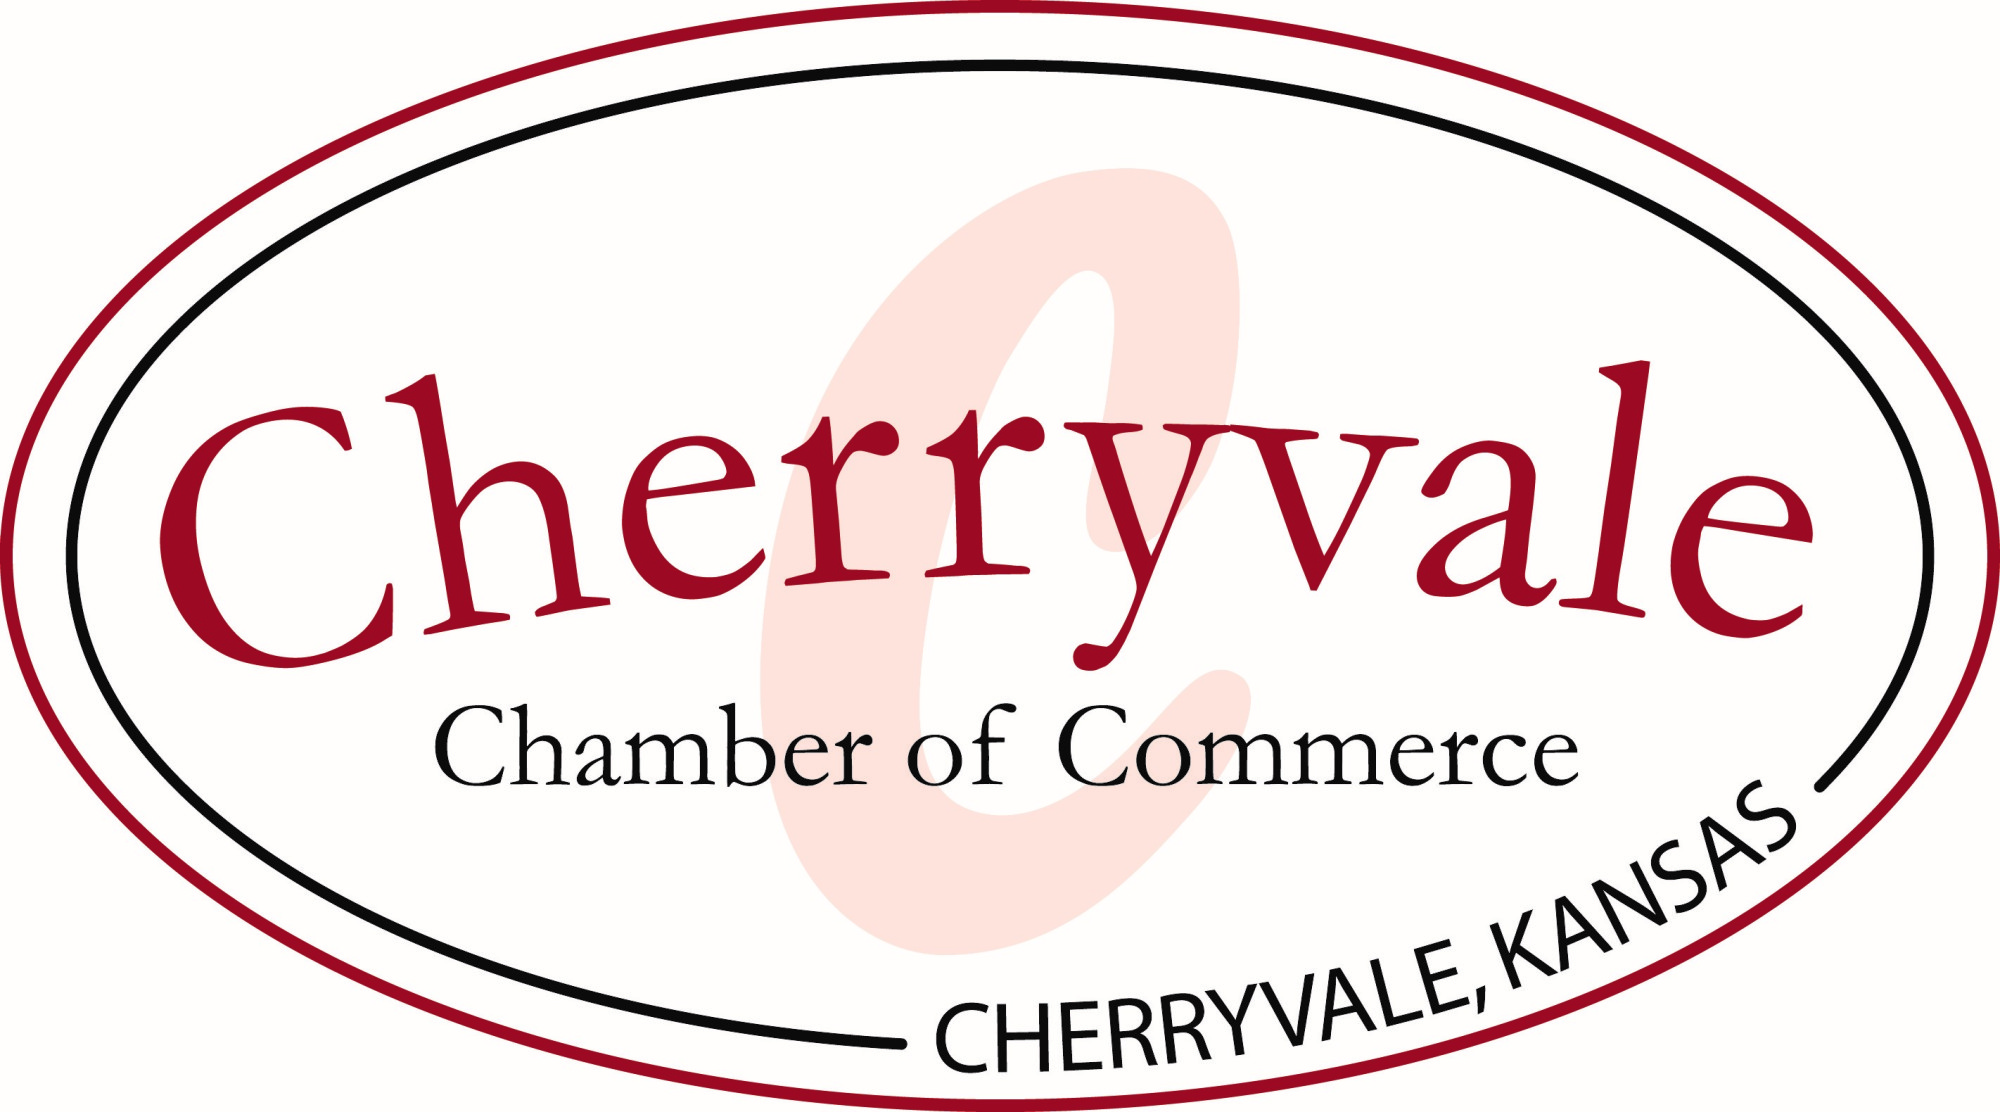 Cherryvale Chamber of Commerce's Logo